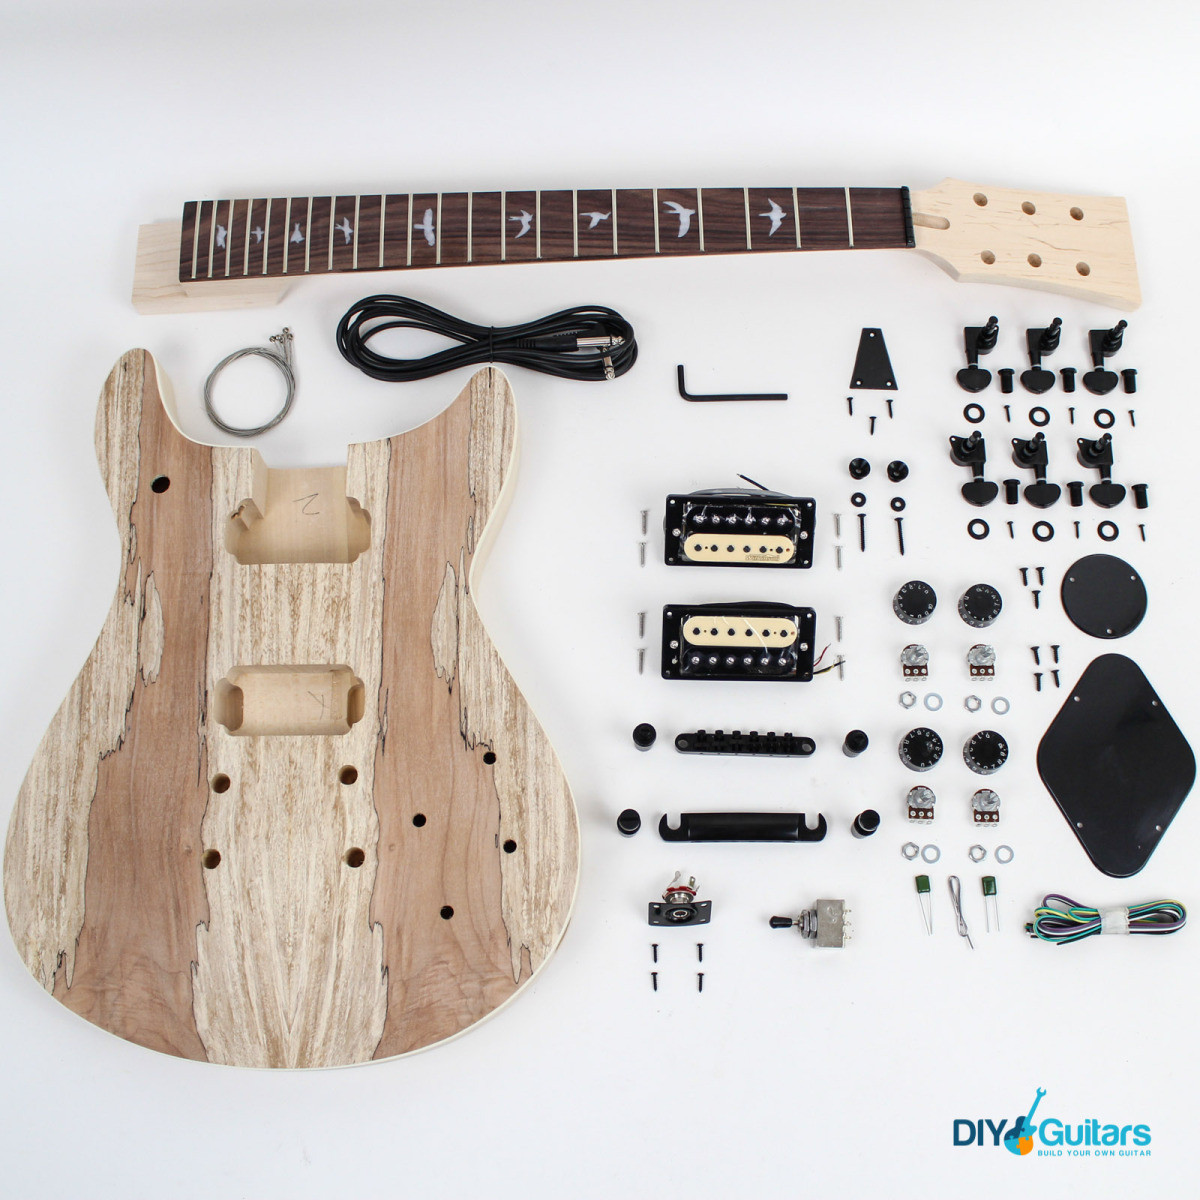 Best ideas about DIY Guitar Kits
. Save or Pin USA Special Guitar Kit DIY Guitars Now.